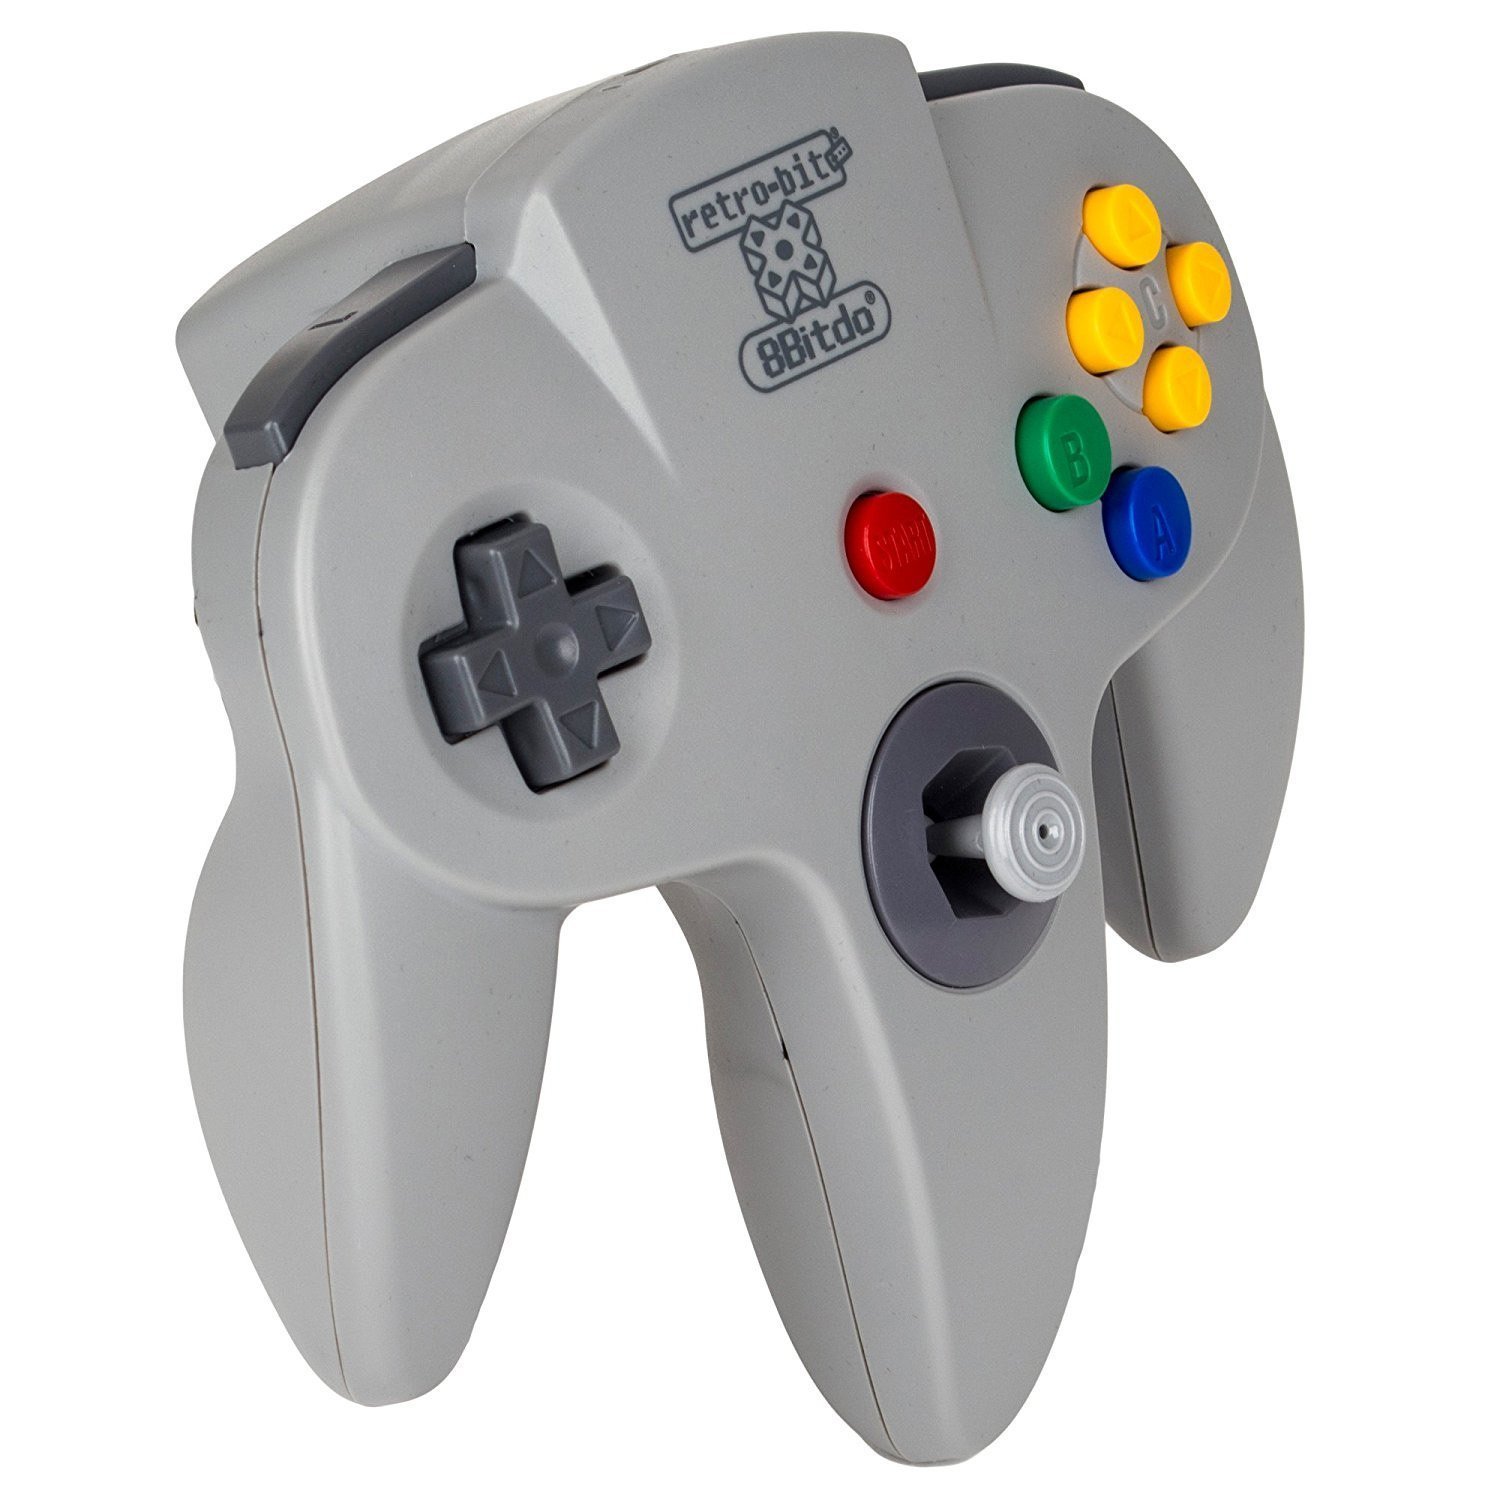 Геймпад 64. N64 контроллер. Контроллер Nintendo 64. Nintendo 64 Gamepad. Нинтендо 64 джойстик беспроводной.